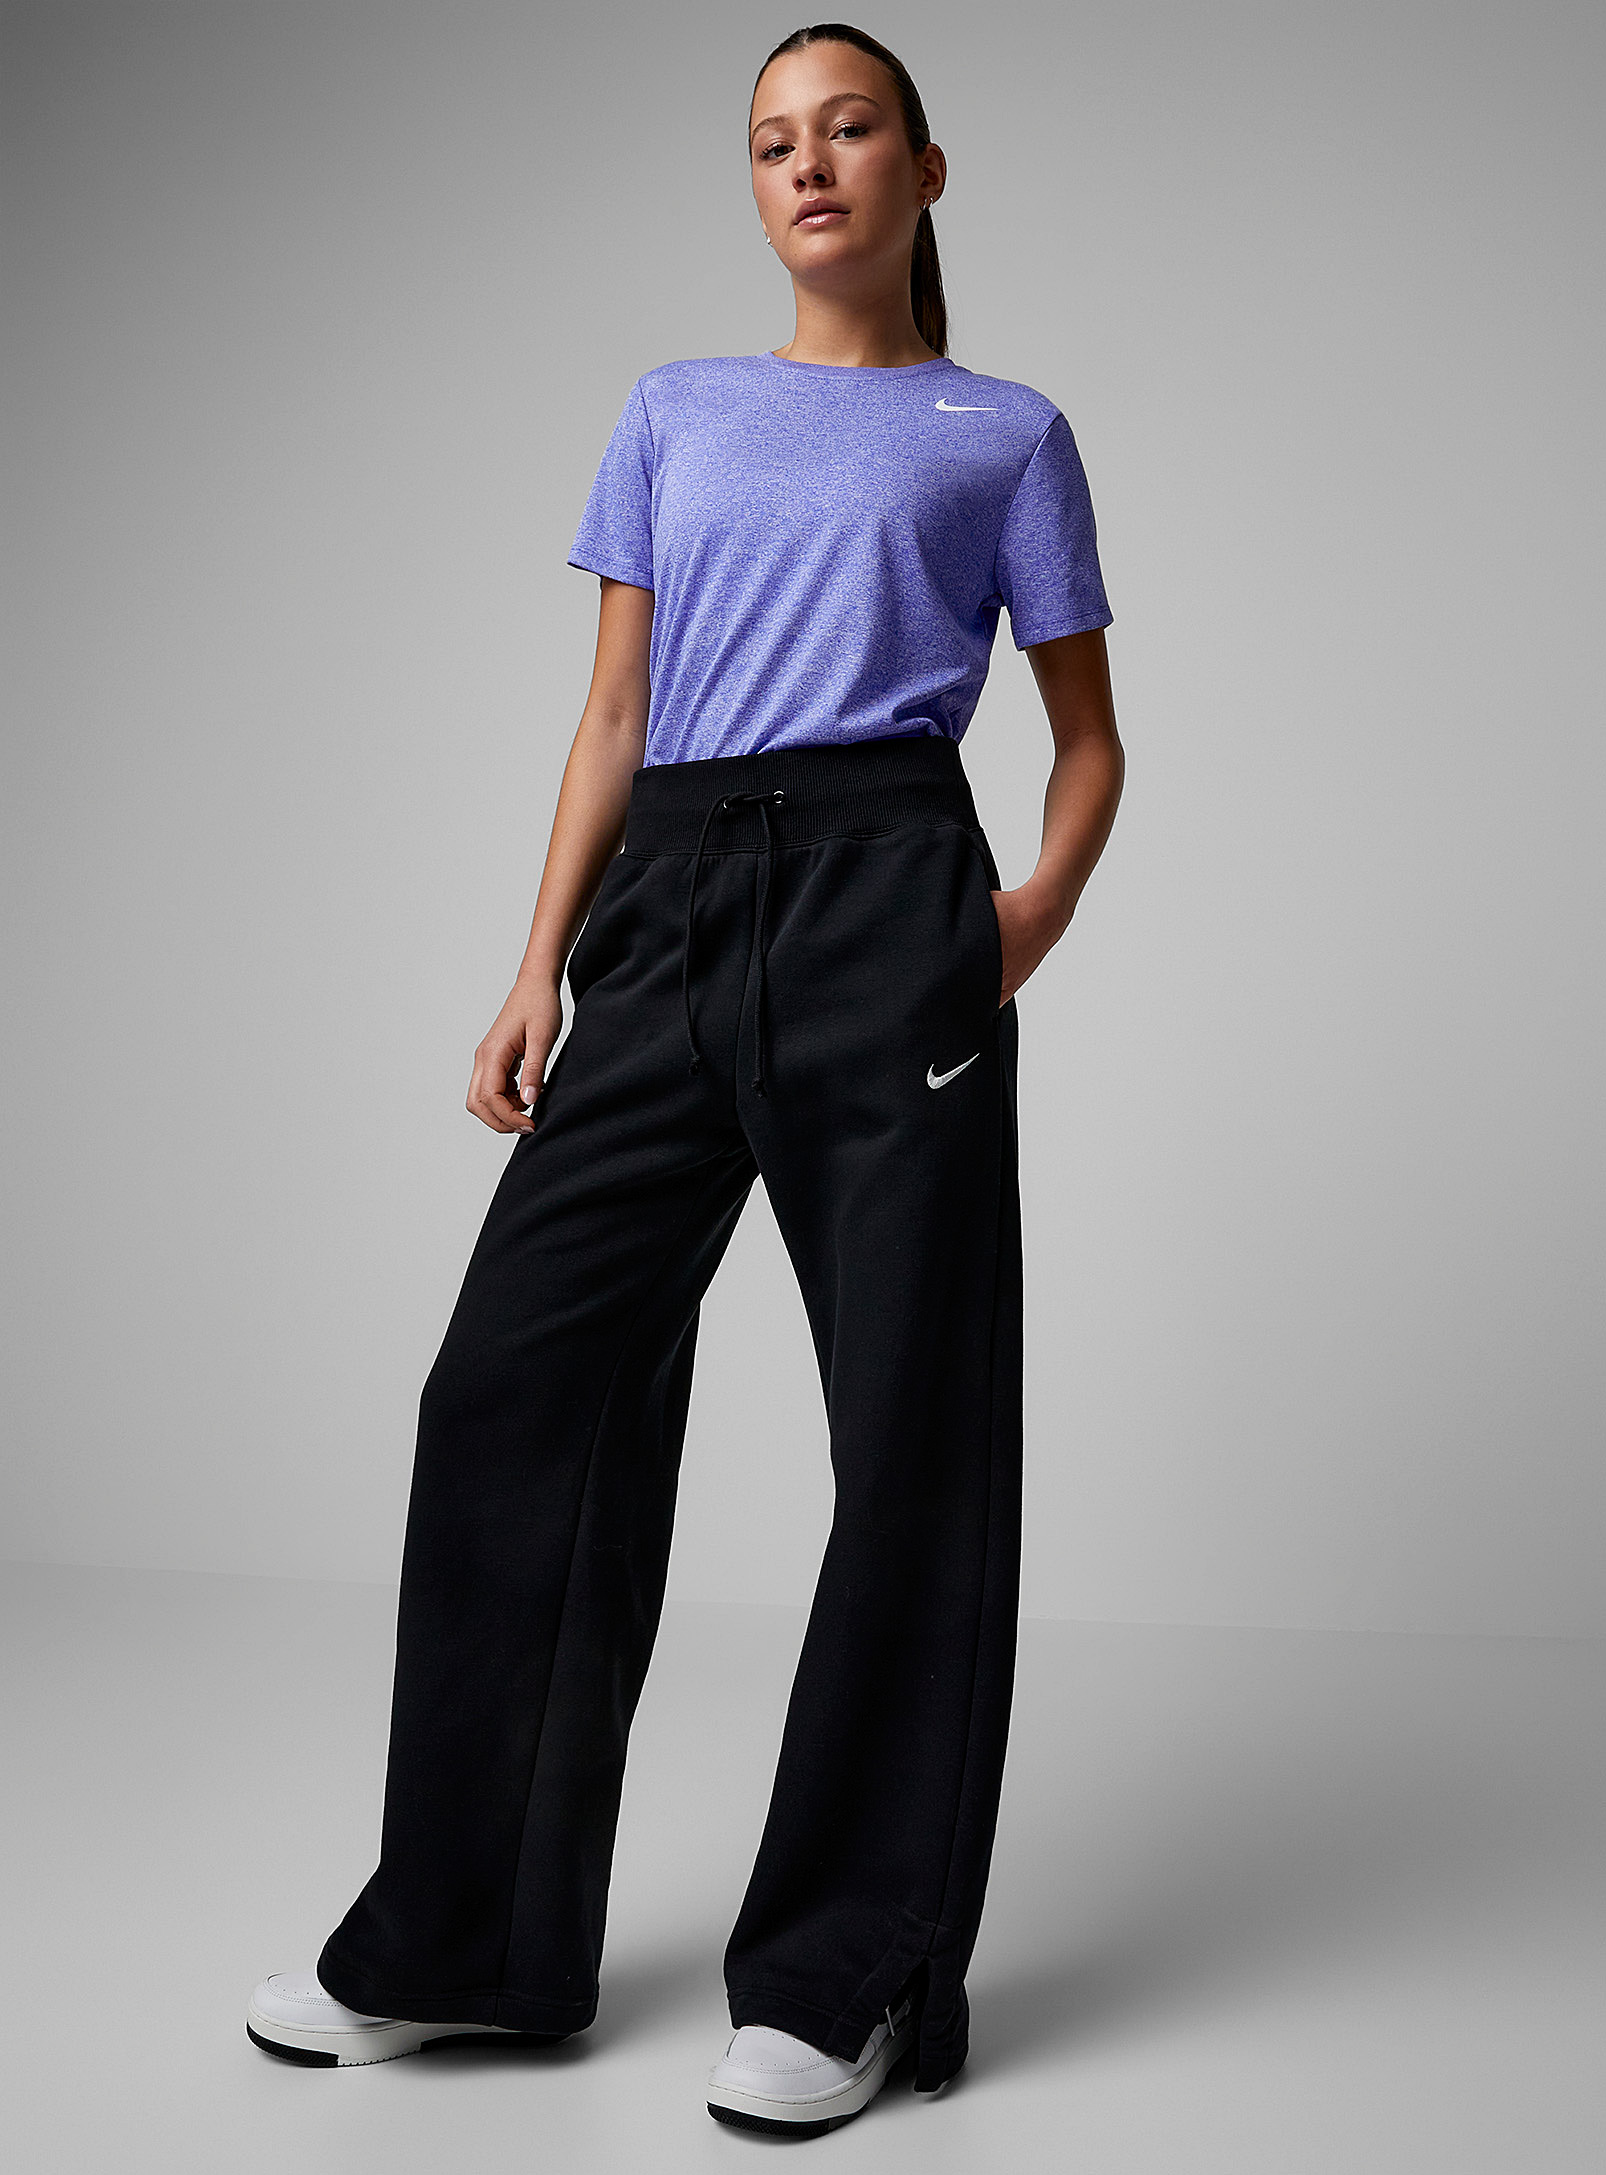 Nike - Women's Phoenix oversized pant